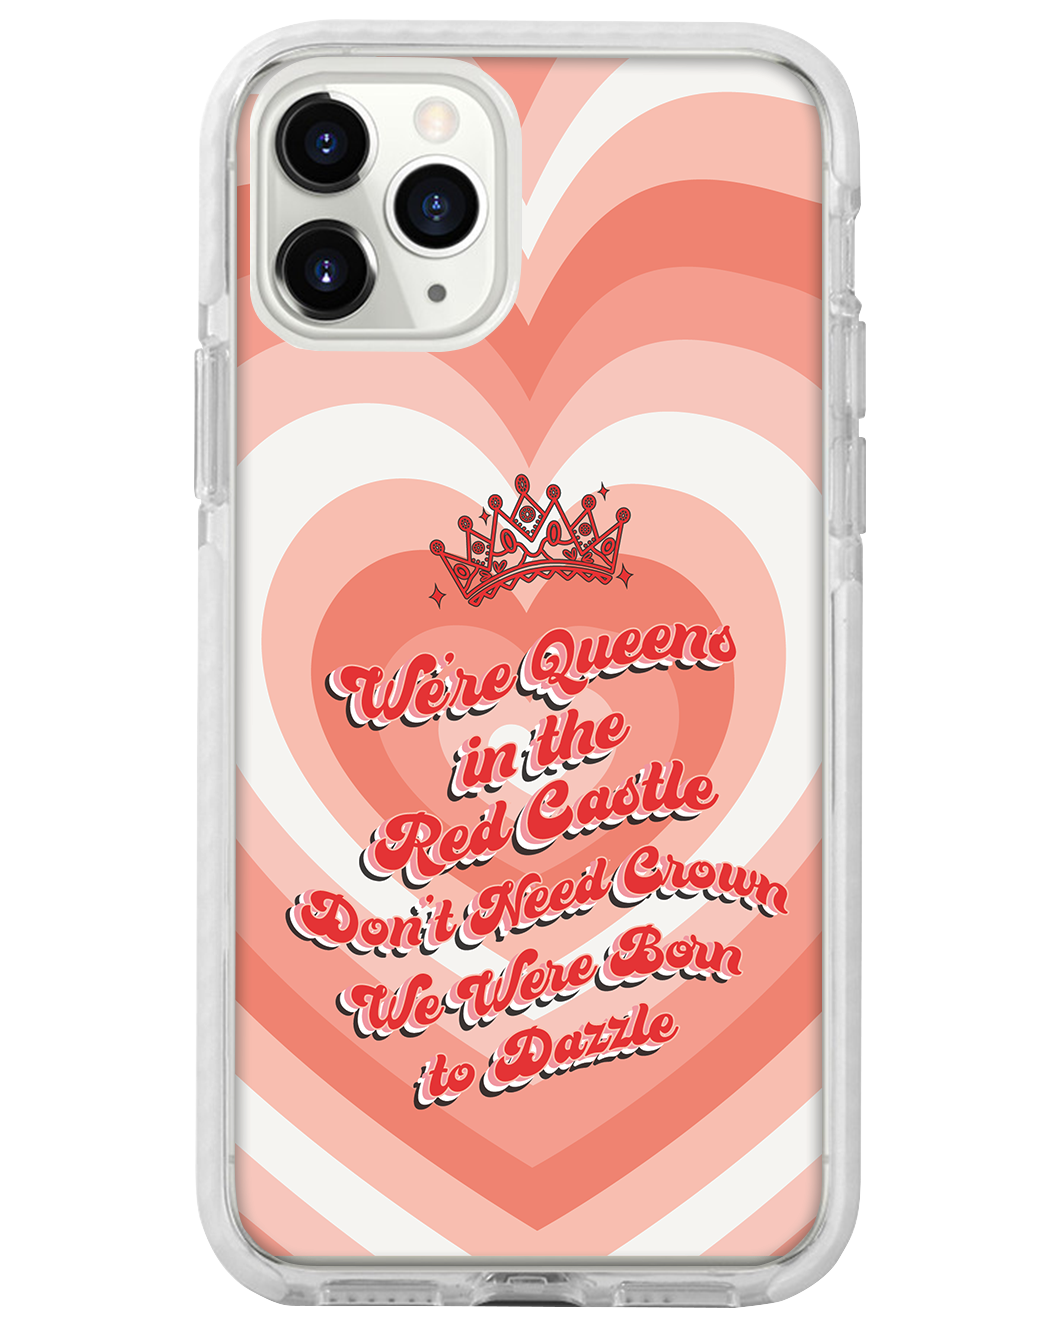 iPhone - Red Velvet Luv